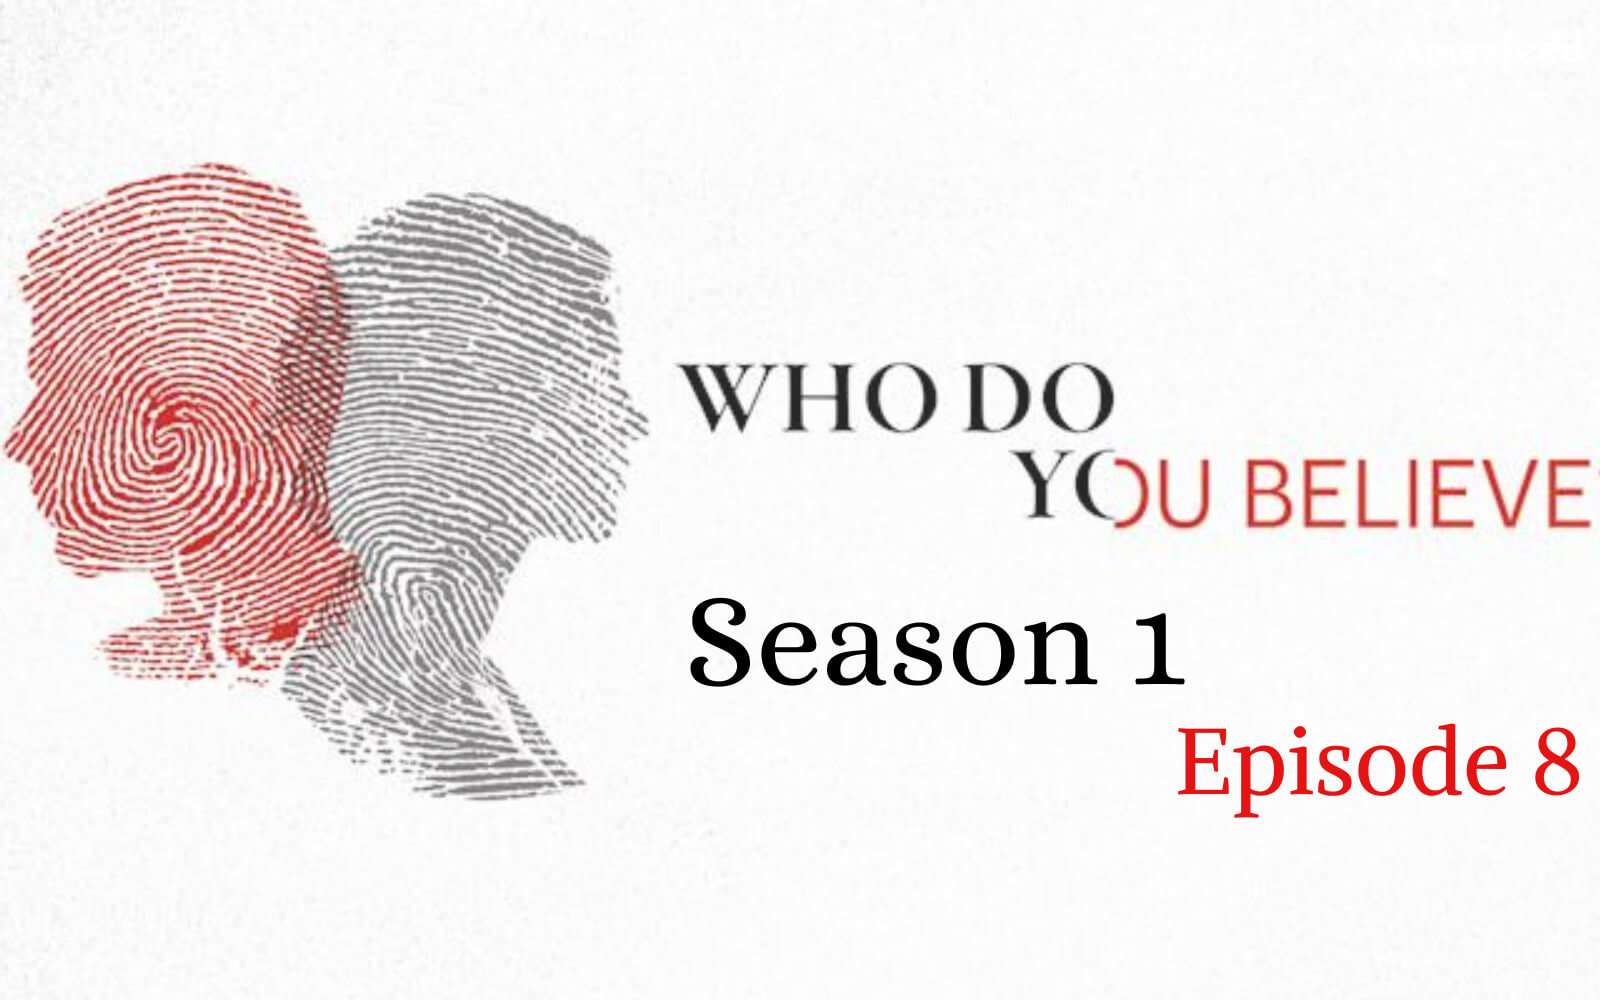 Who Do You Believe Season 1 Episode 8 release date